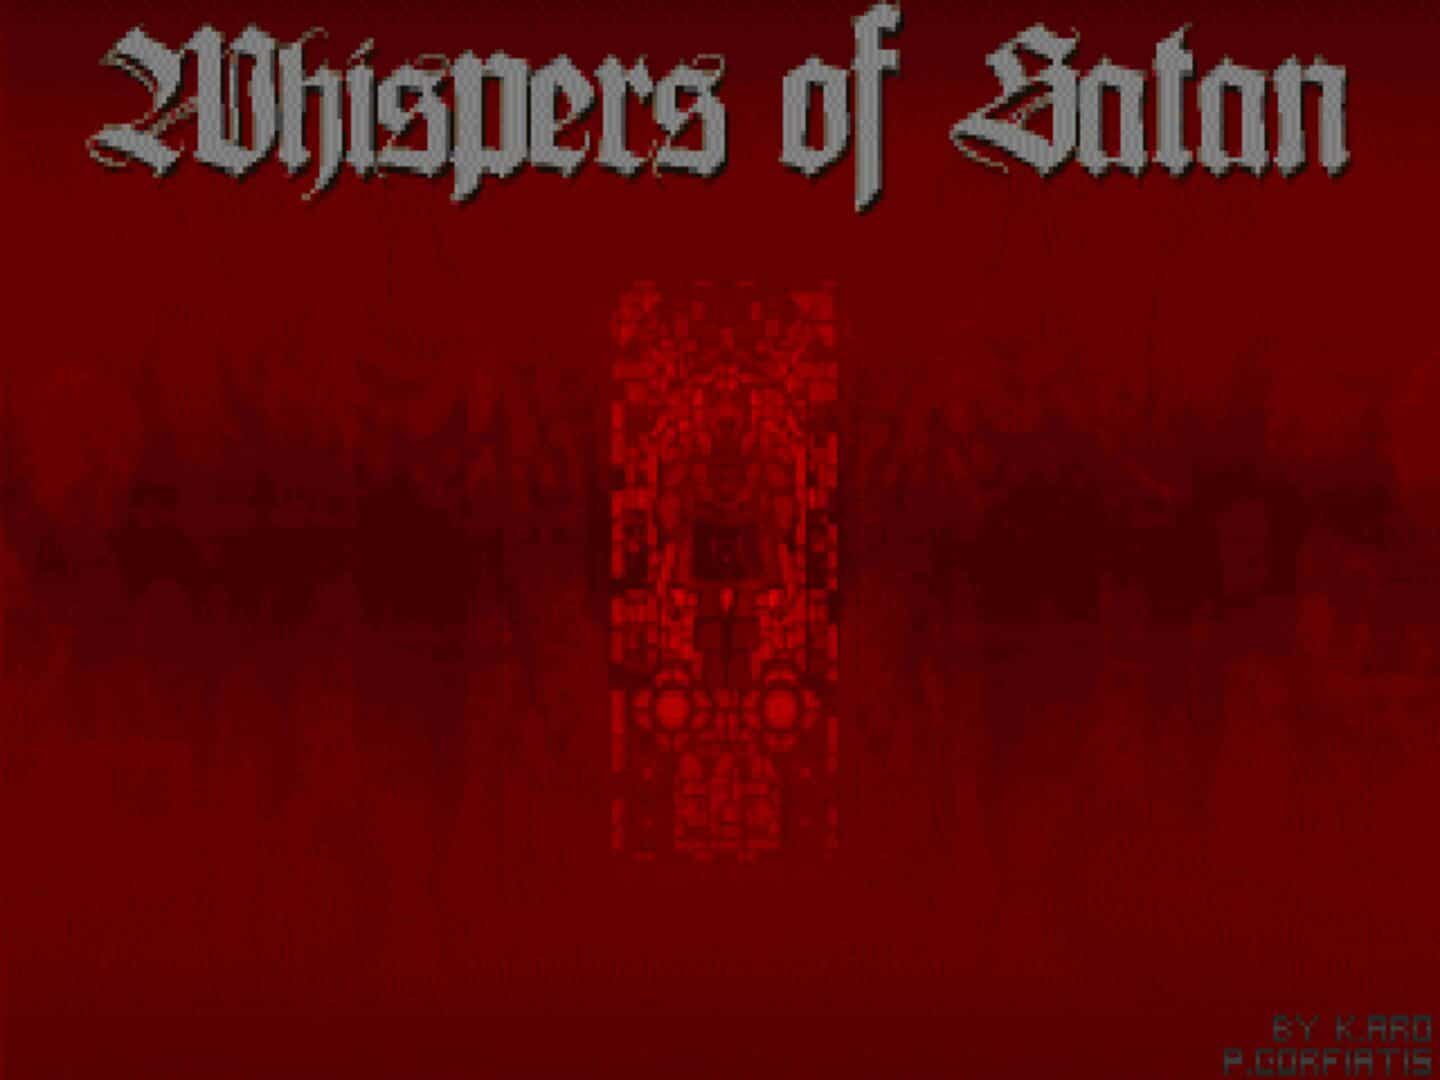 Whispers of Satan